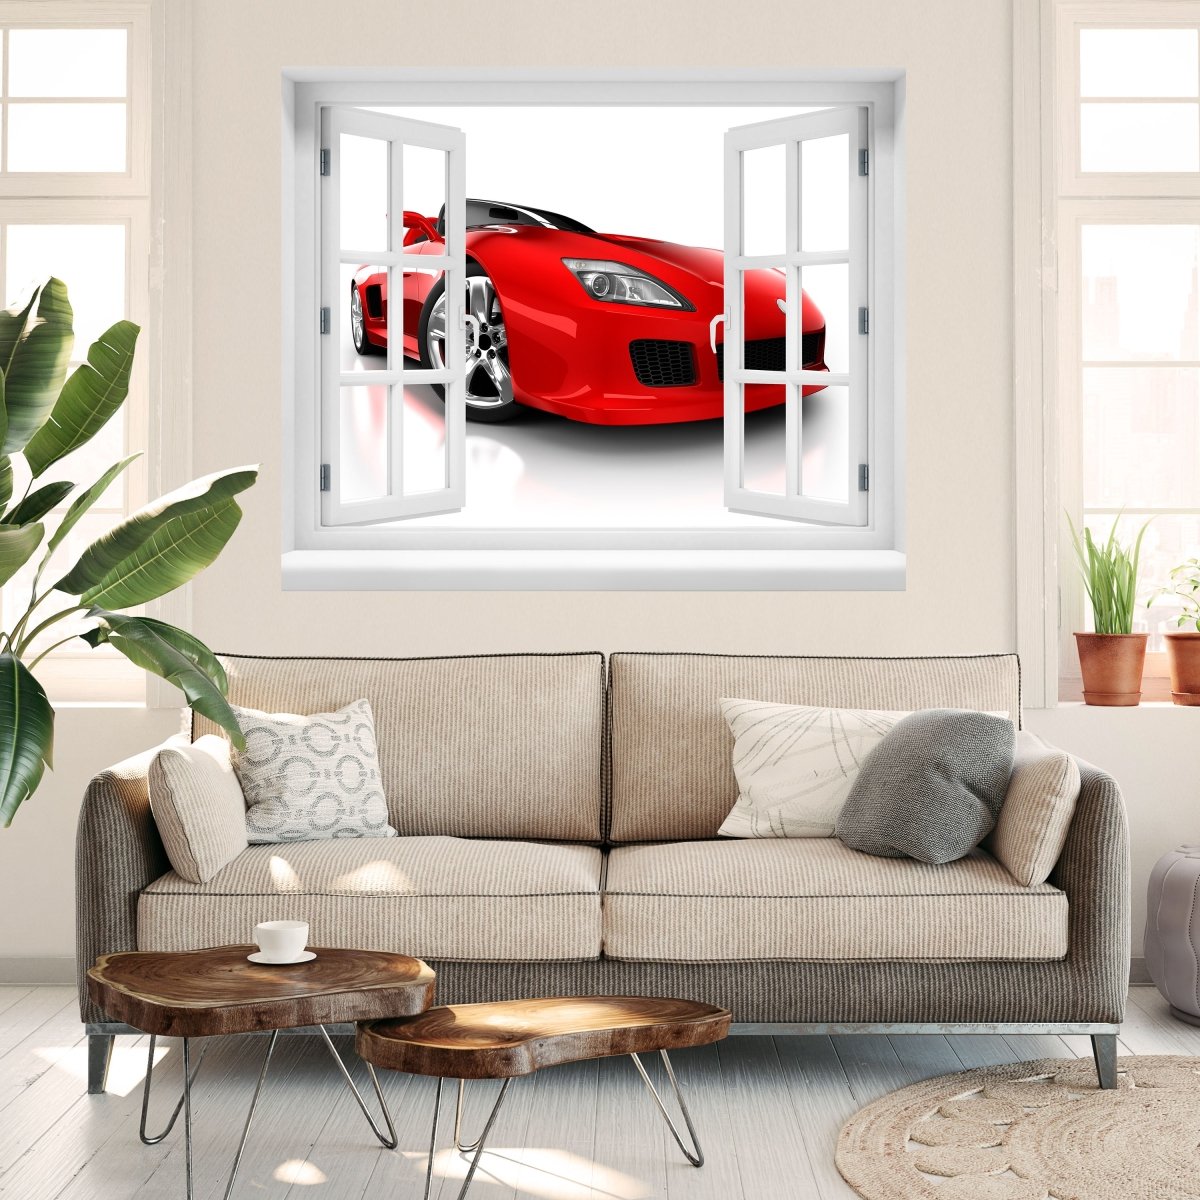 Red Sports Car 3D Wall Sticker - Wall Decal M0371